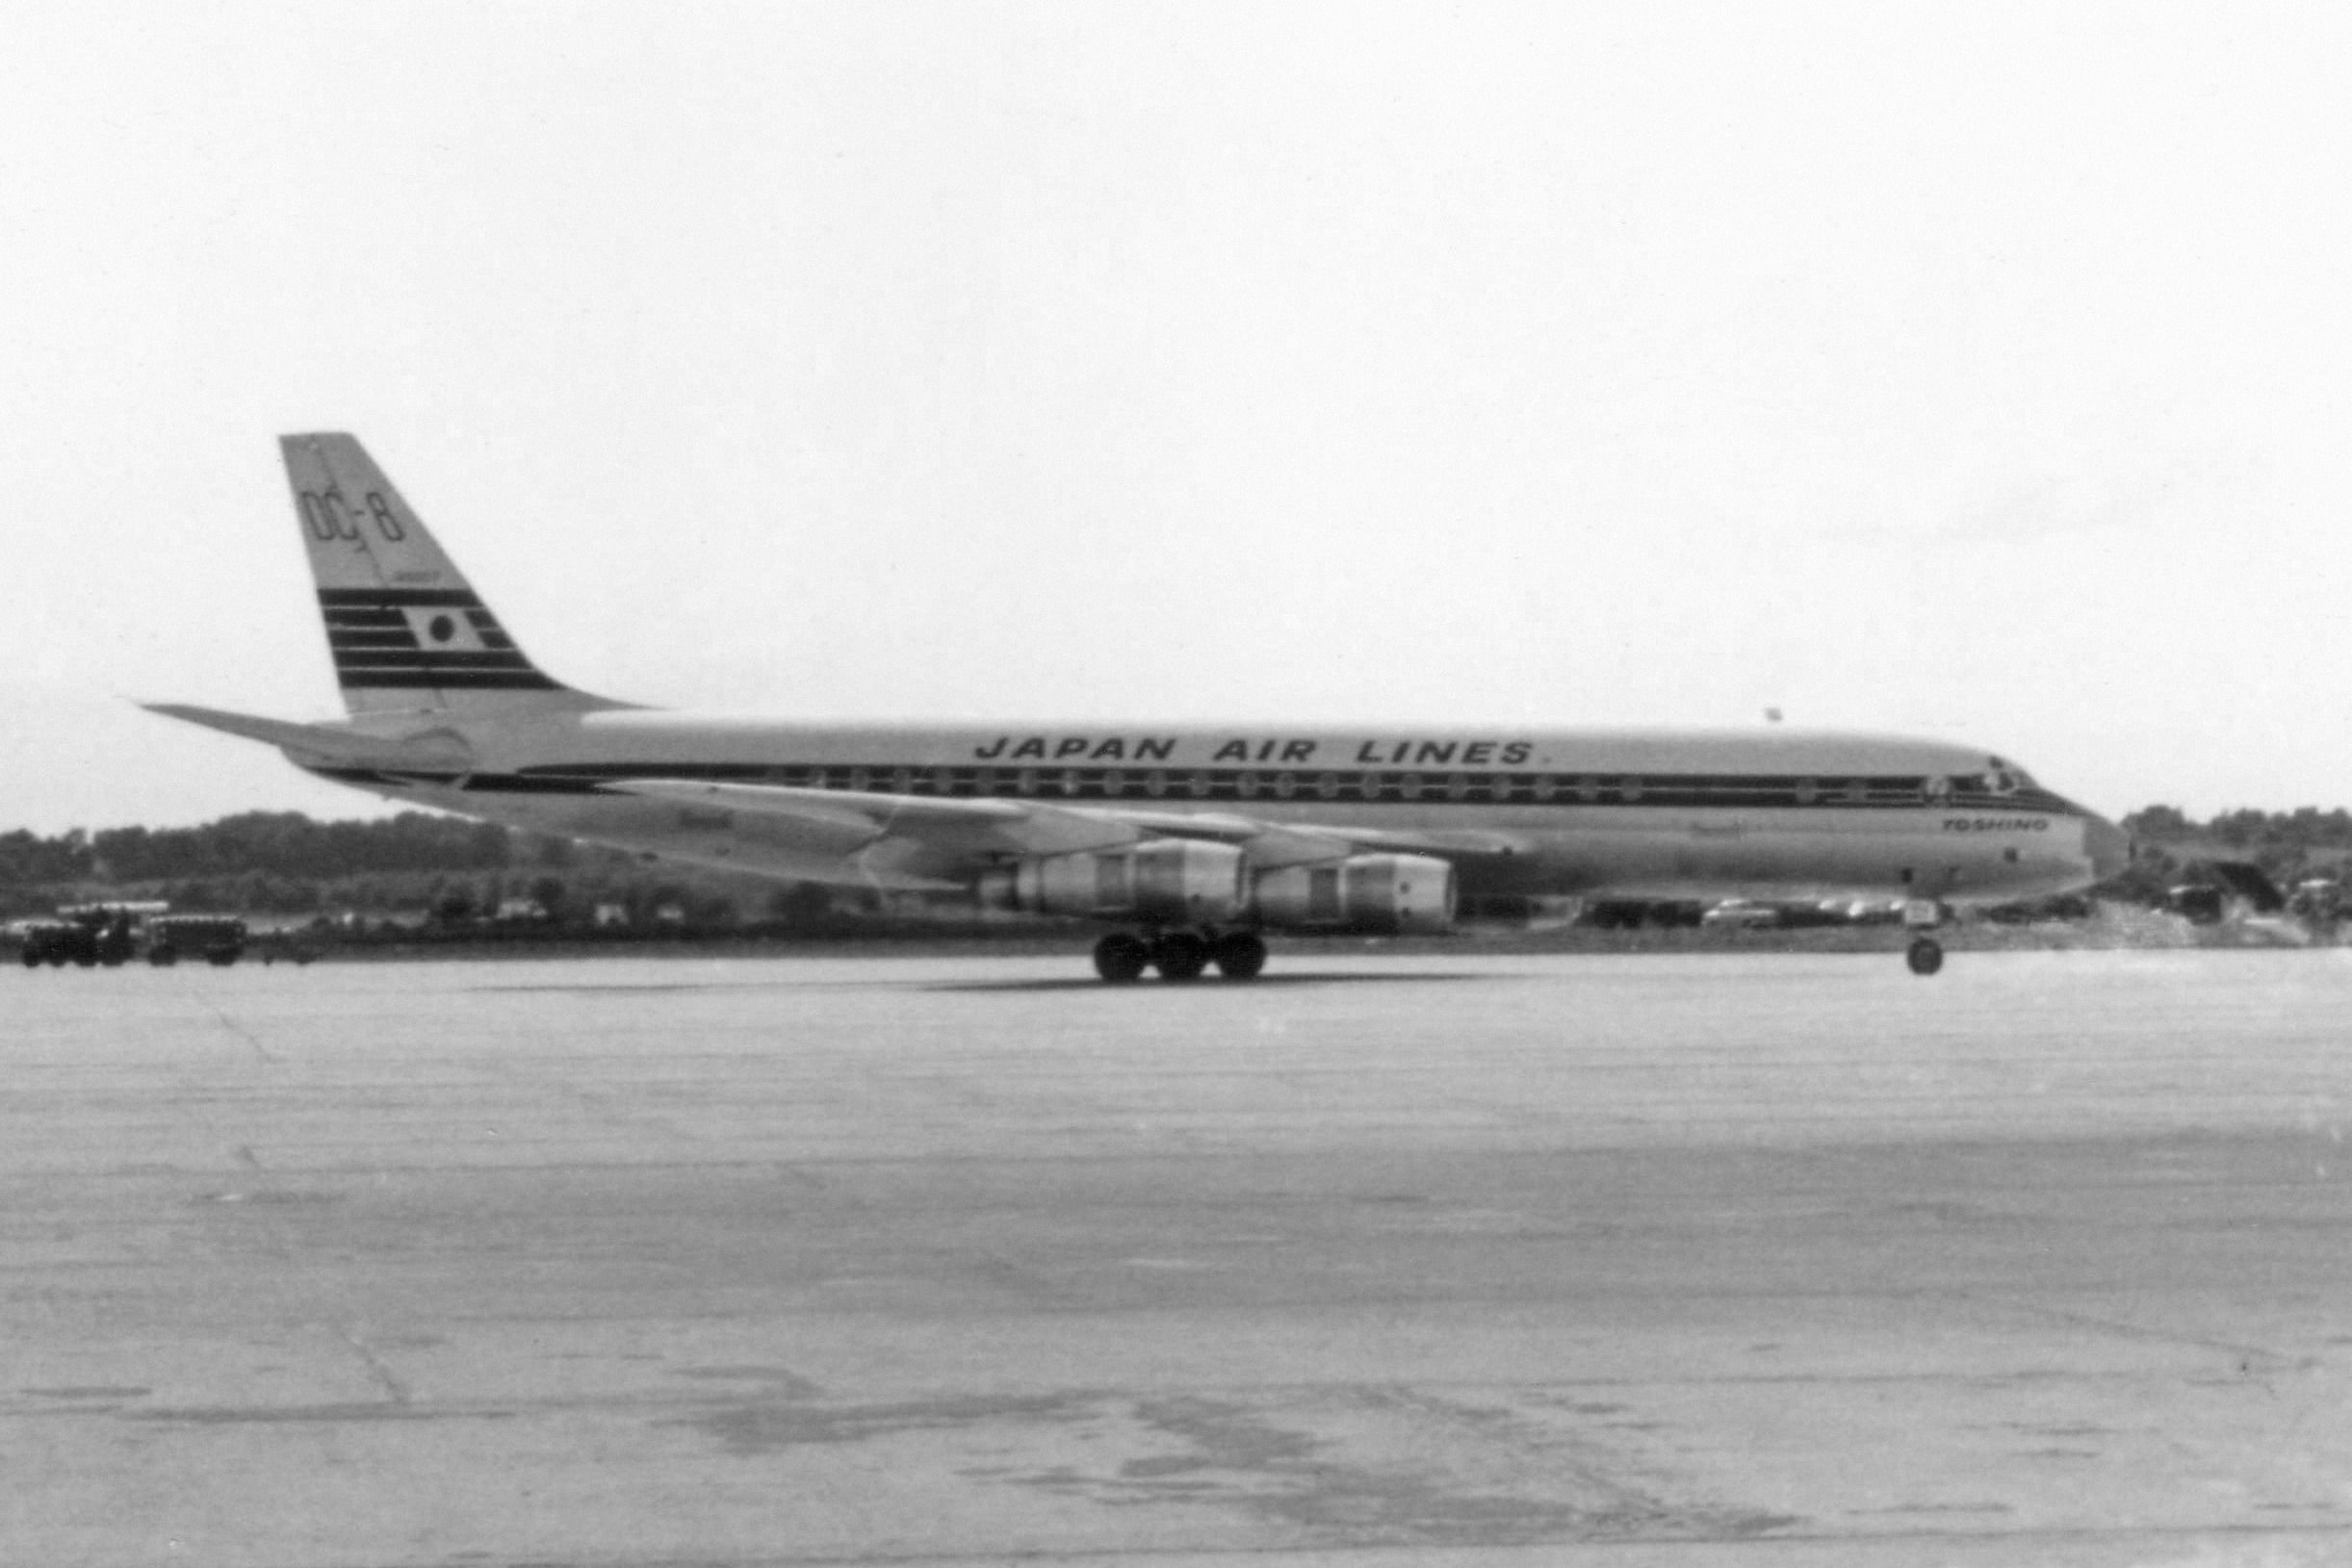 A Japan Air Lines DC-8 aircraft.